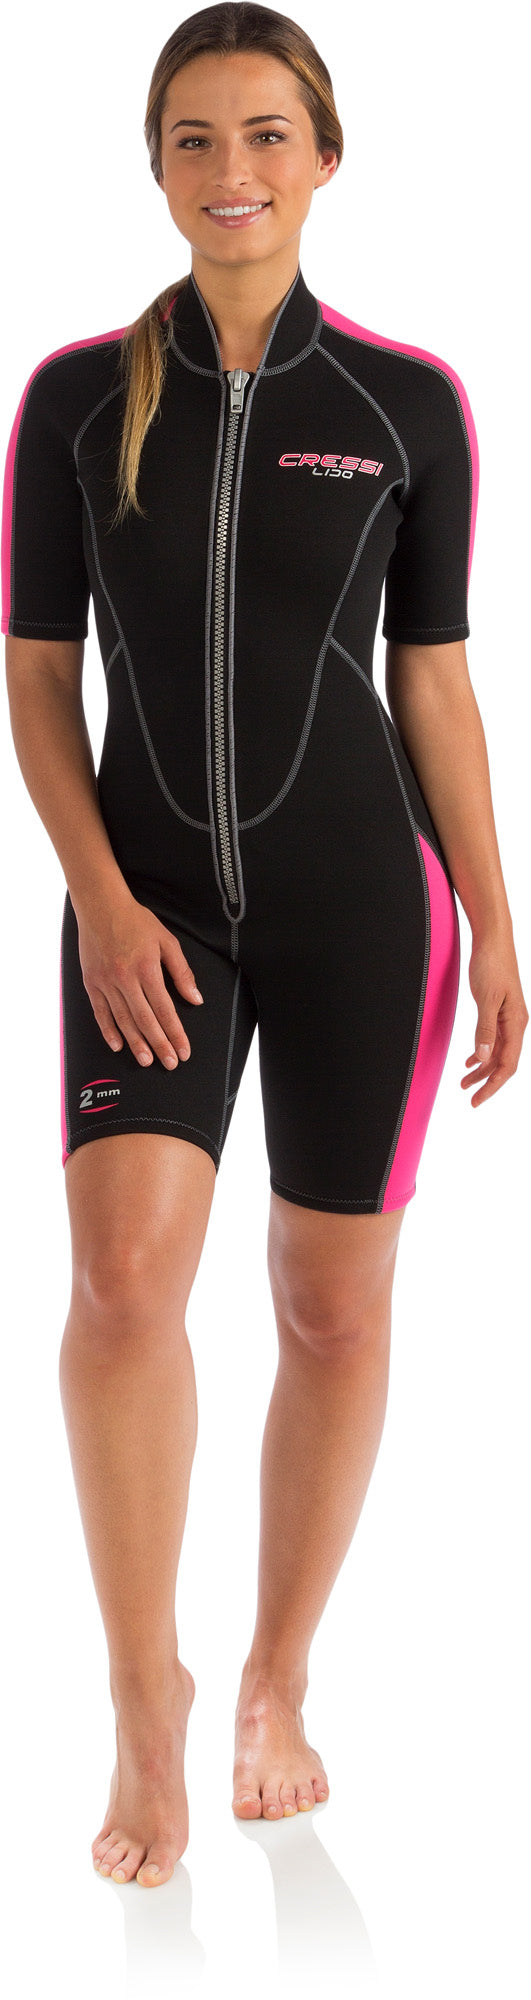 Cressi Ladies; Full Front Zip Wetsuit for Swimming, Snorkeling, Scuba Diving - Lido Short